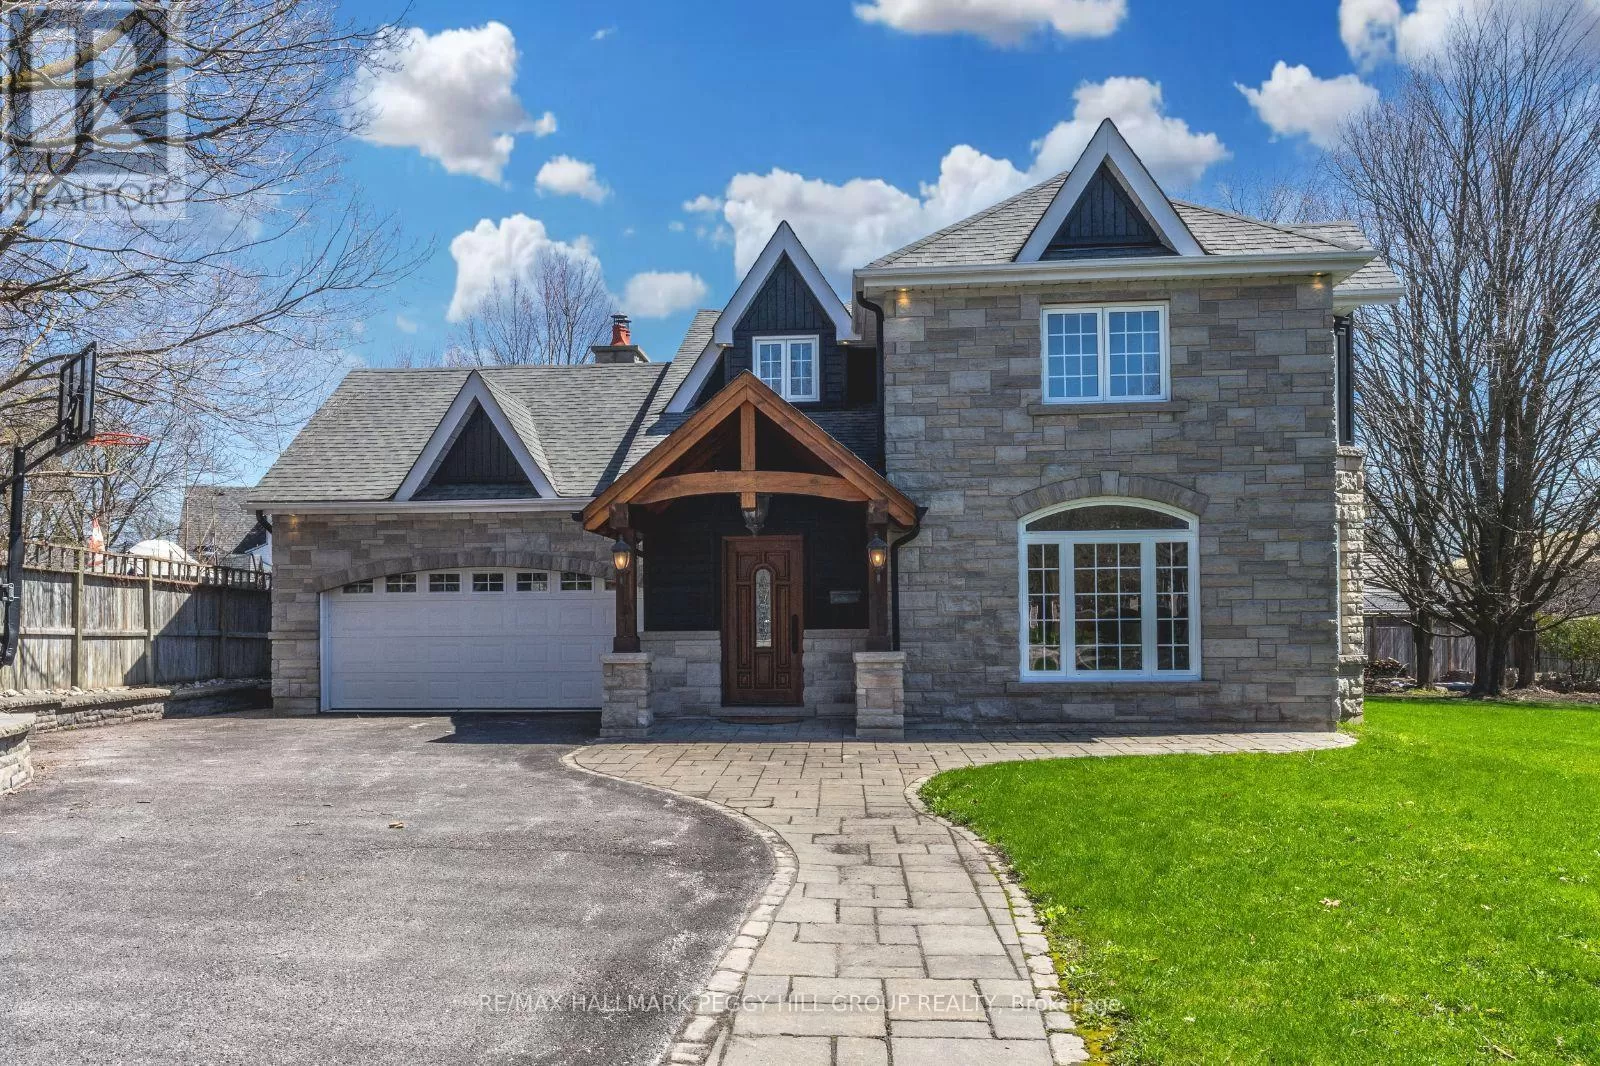 House for rent: 105 Duckworth St, Barrie, Ontario L4M 3V9